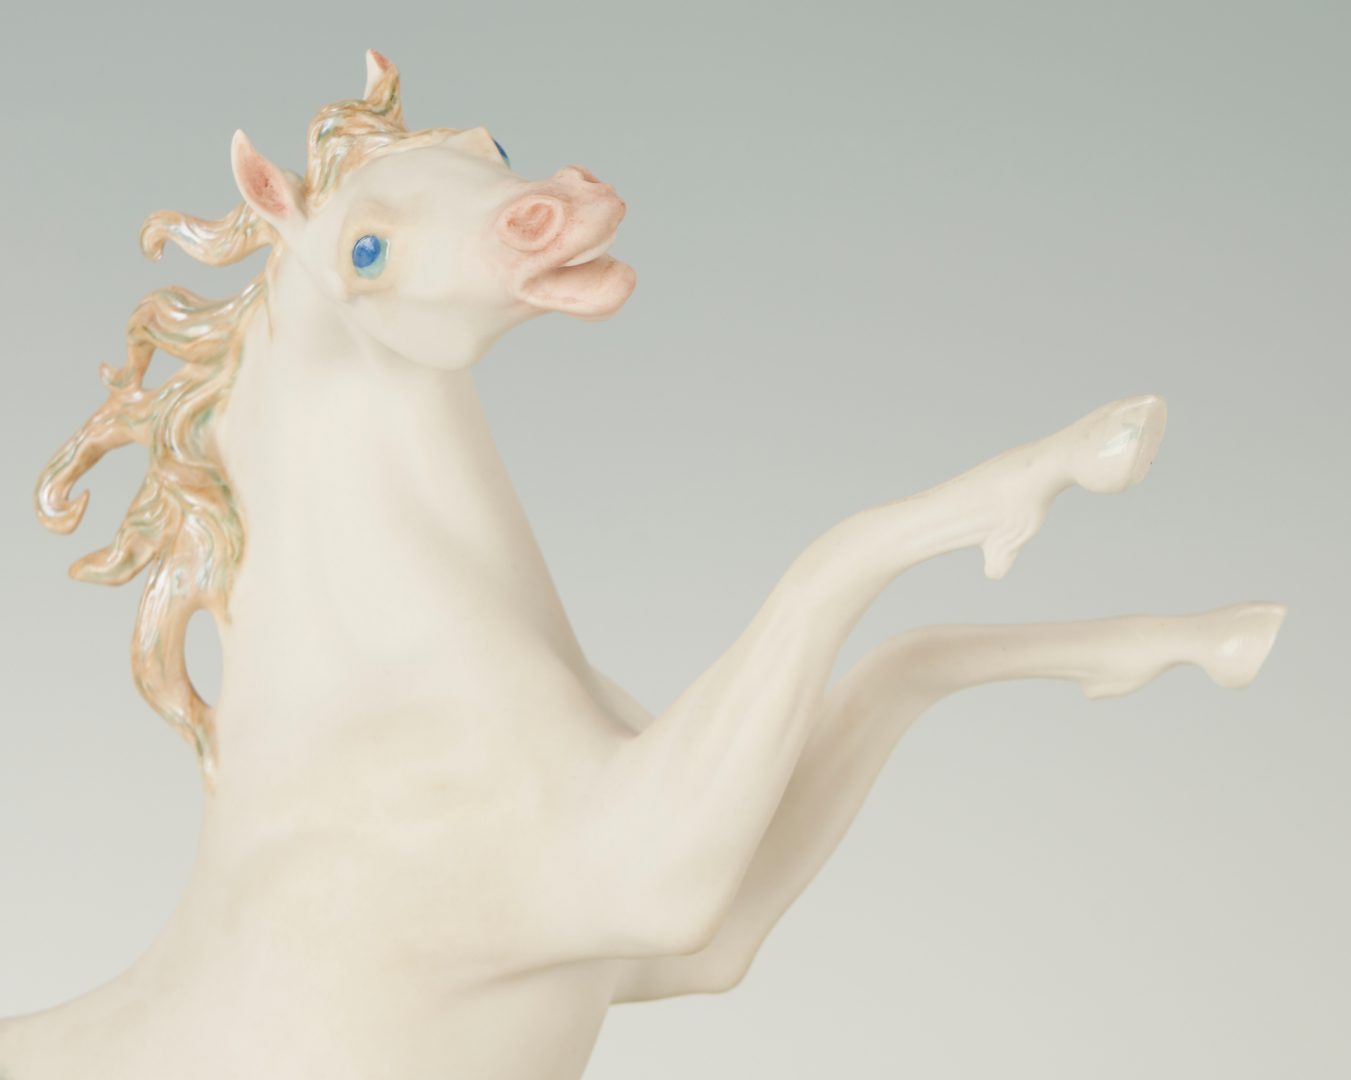 Lot 422: 3 Cybis Porcelain Horse Sculptures, incl. Oceania, Ticonderoga